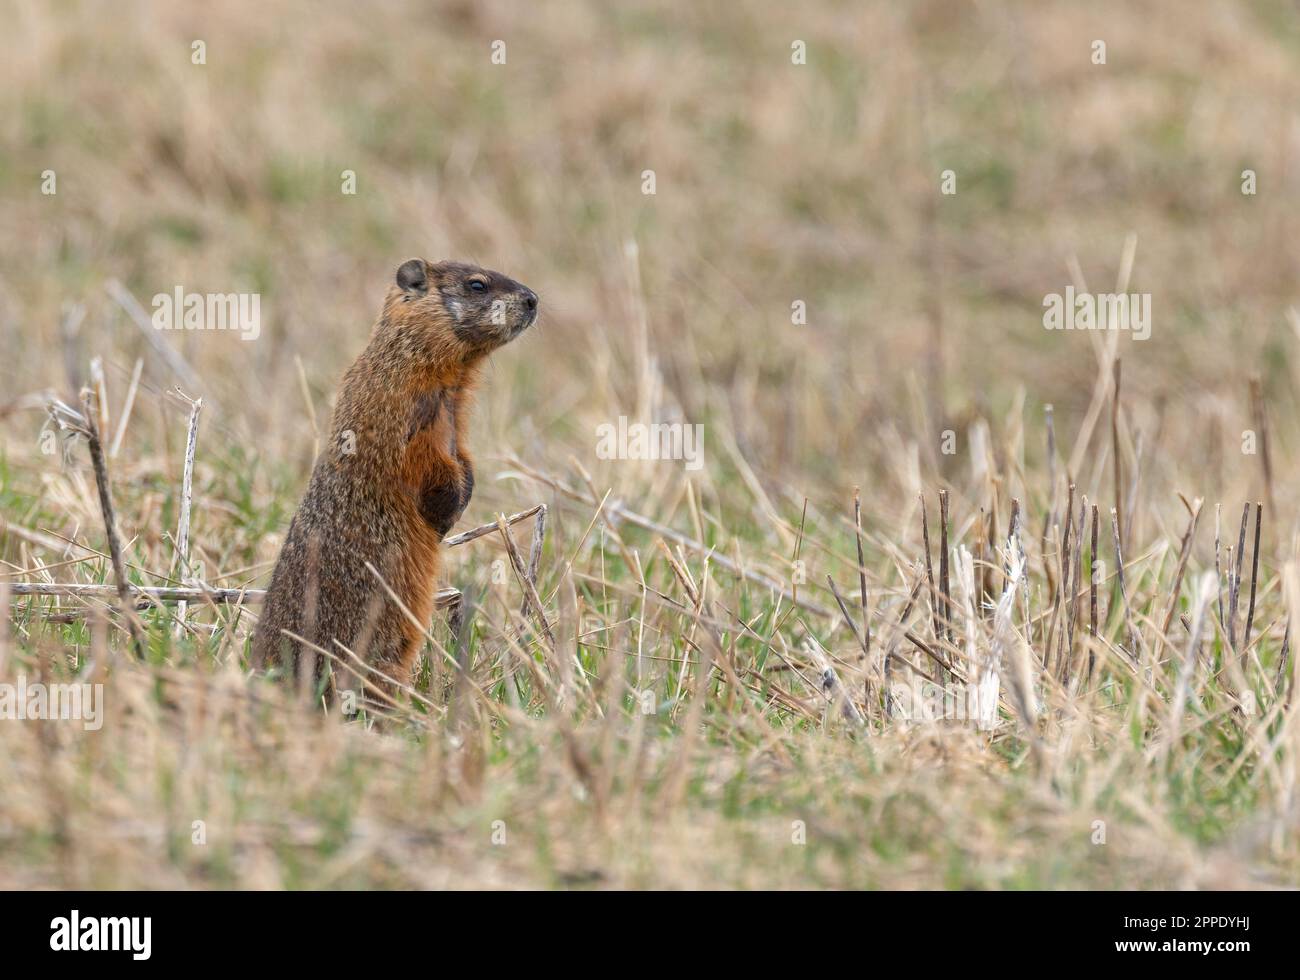 An alert groundhog standing in a grassy rural field in springtime in Muskoka Stock Photo